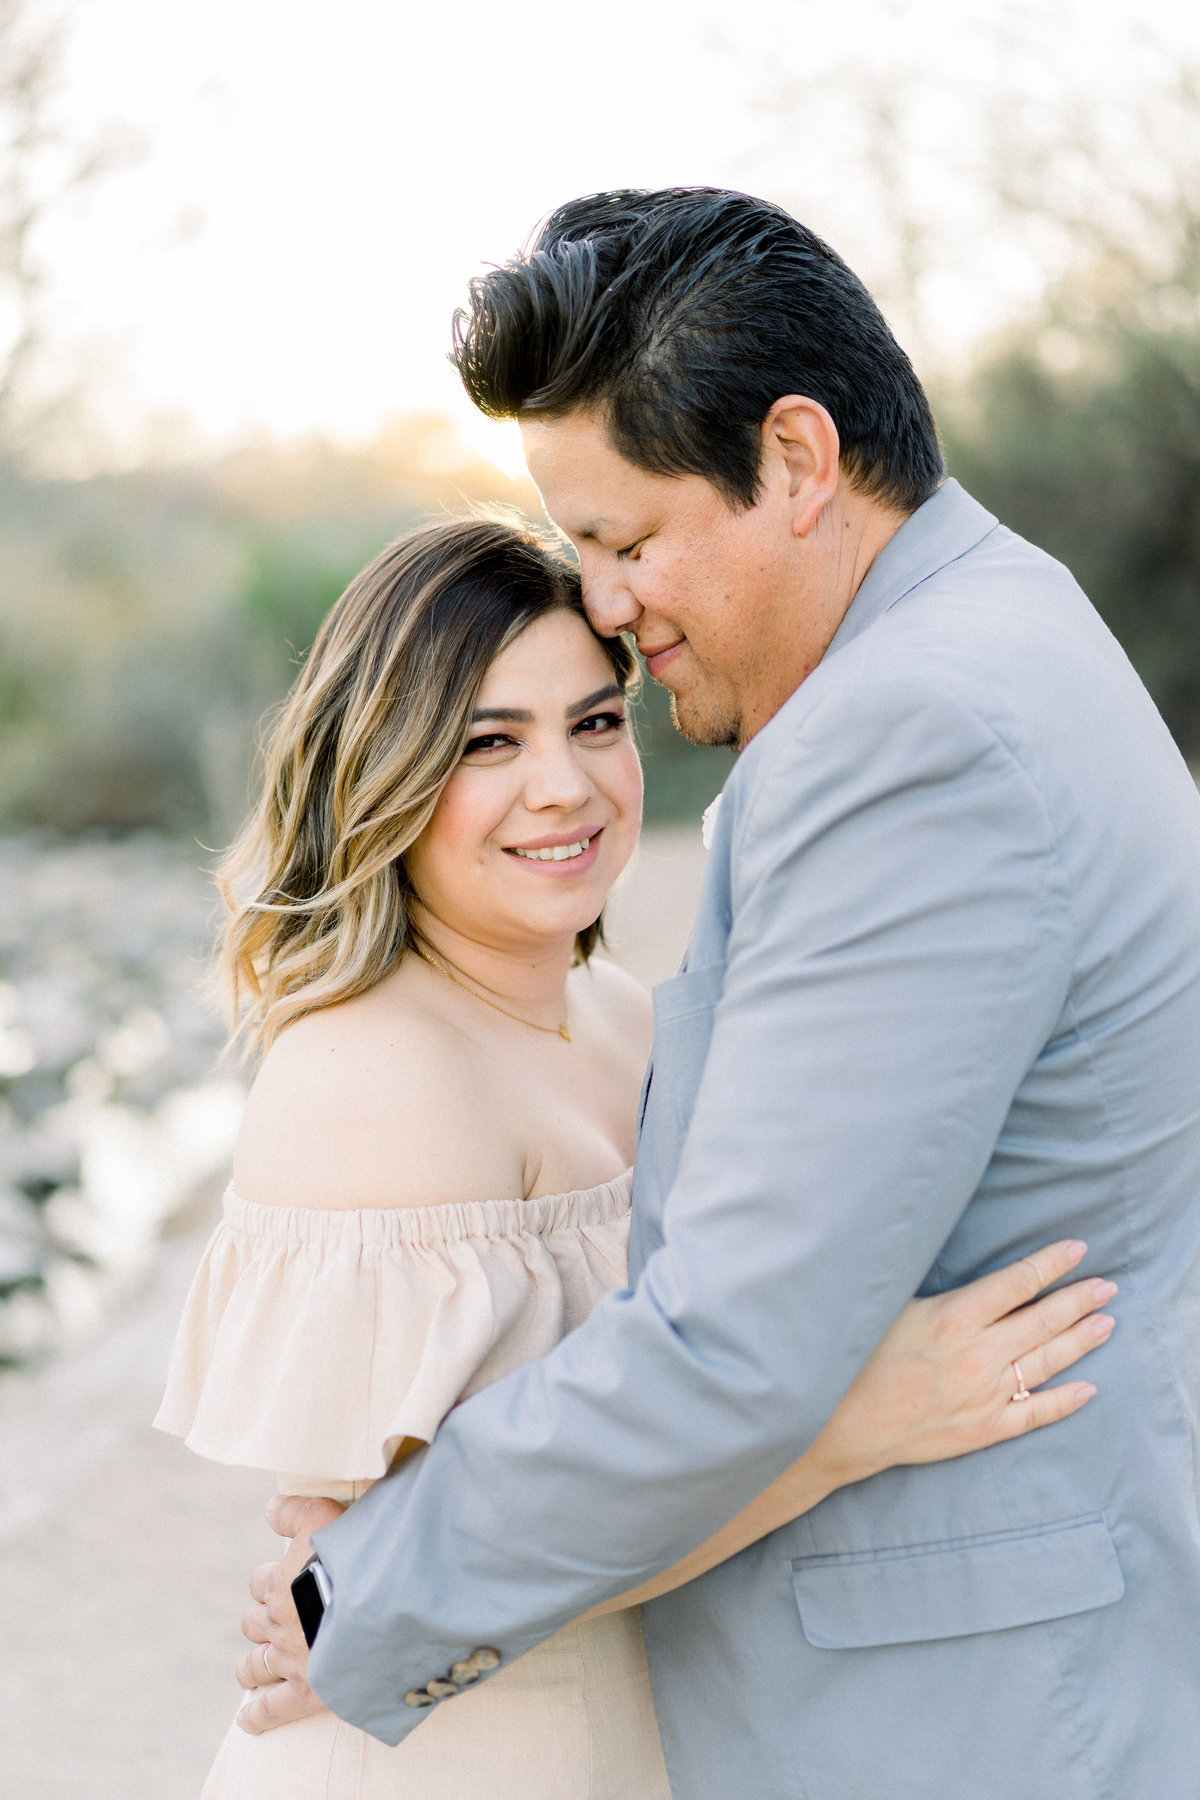 Ruby Sandoval - Tucson Arizona Wedding Photographer Family Photographer